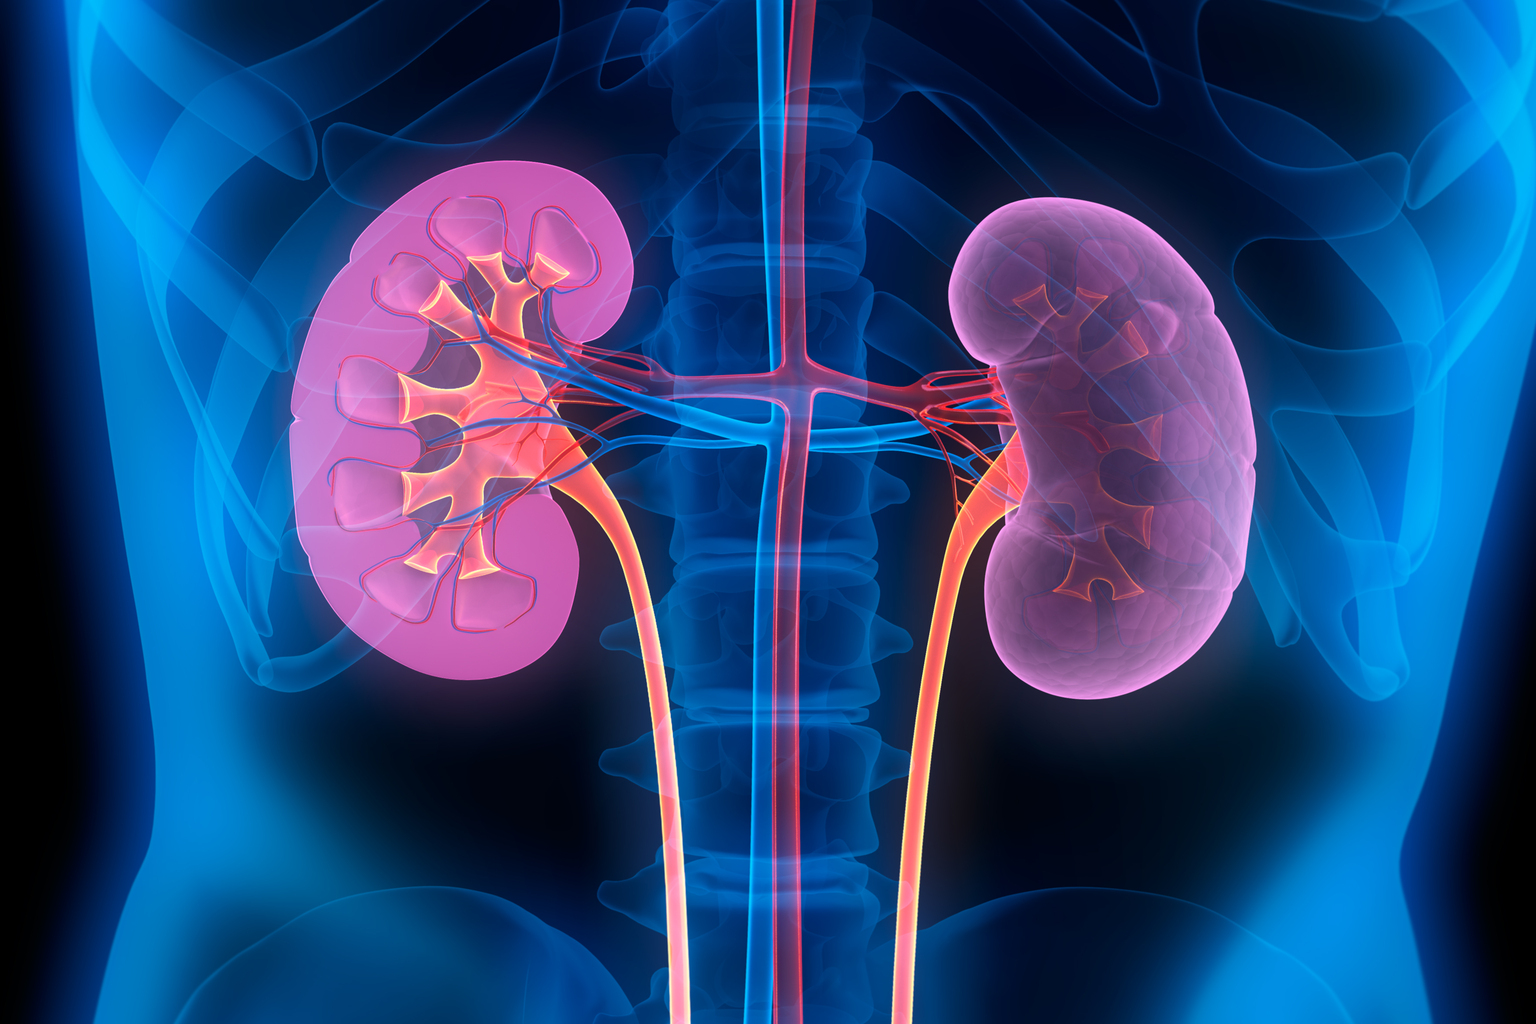 Graphic of kidneys